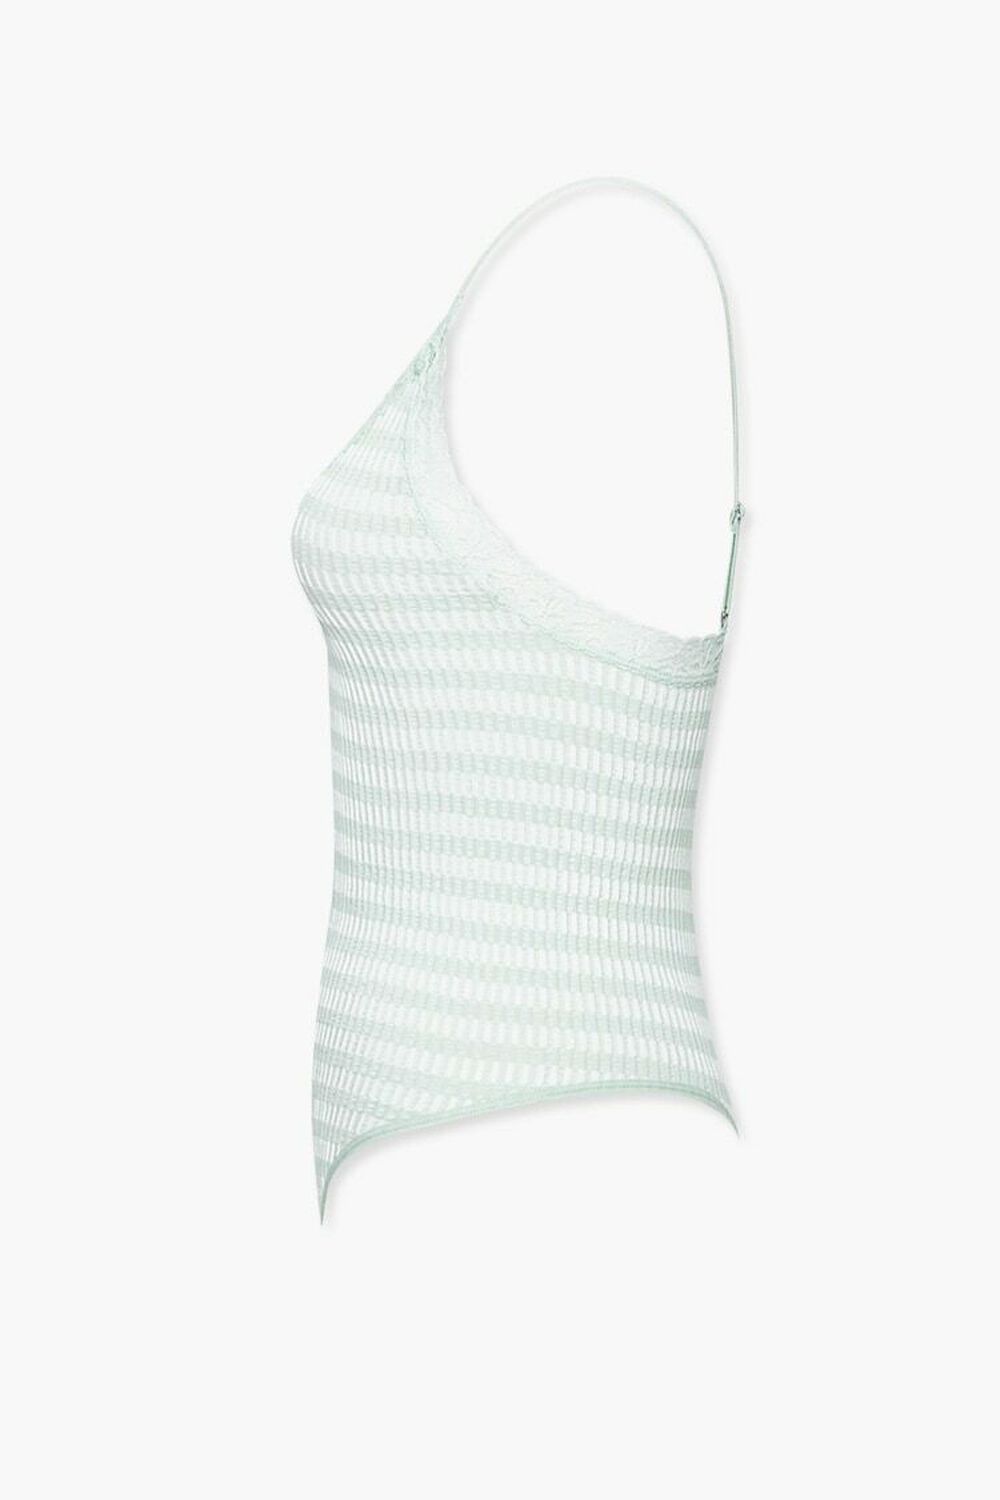 SAGE/WHITE Striped Lace-Trim Bodysuit, image 2